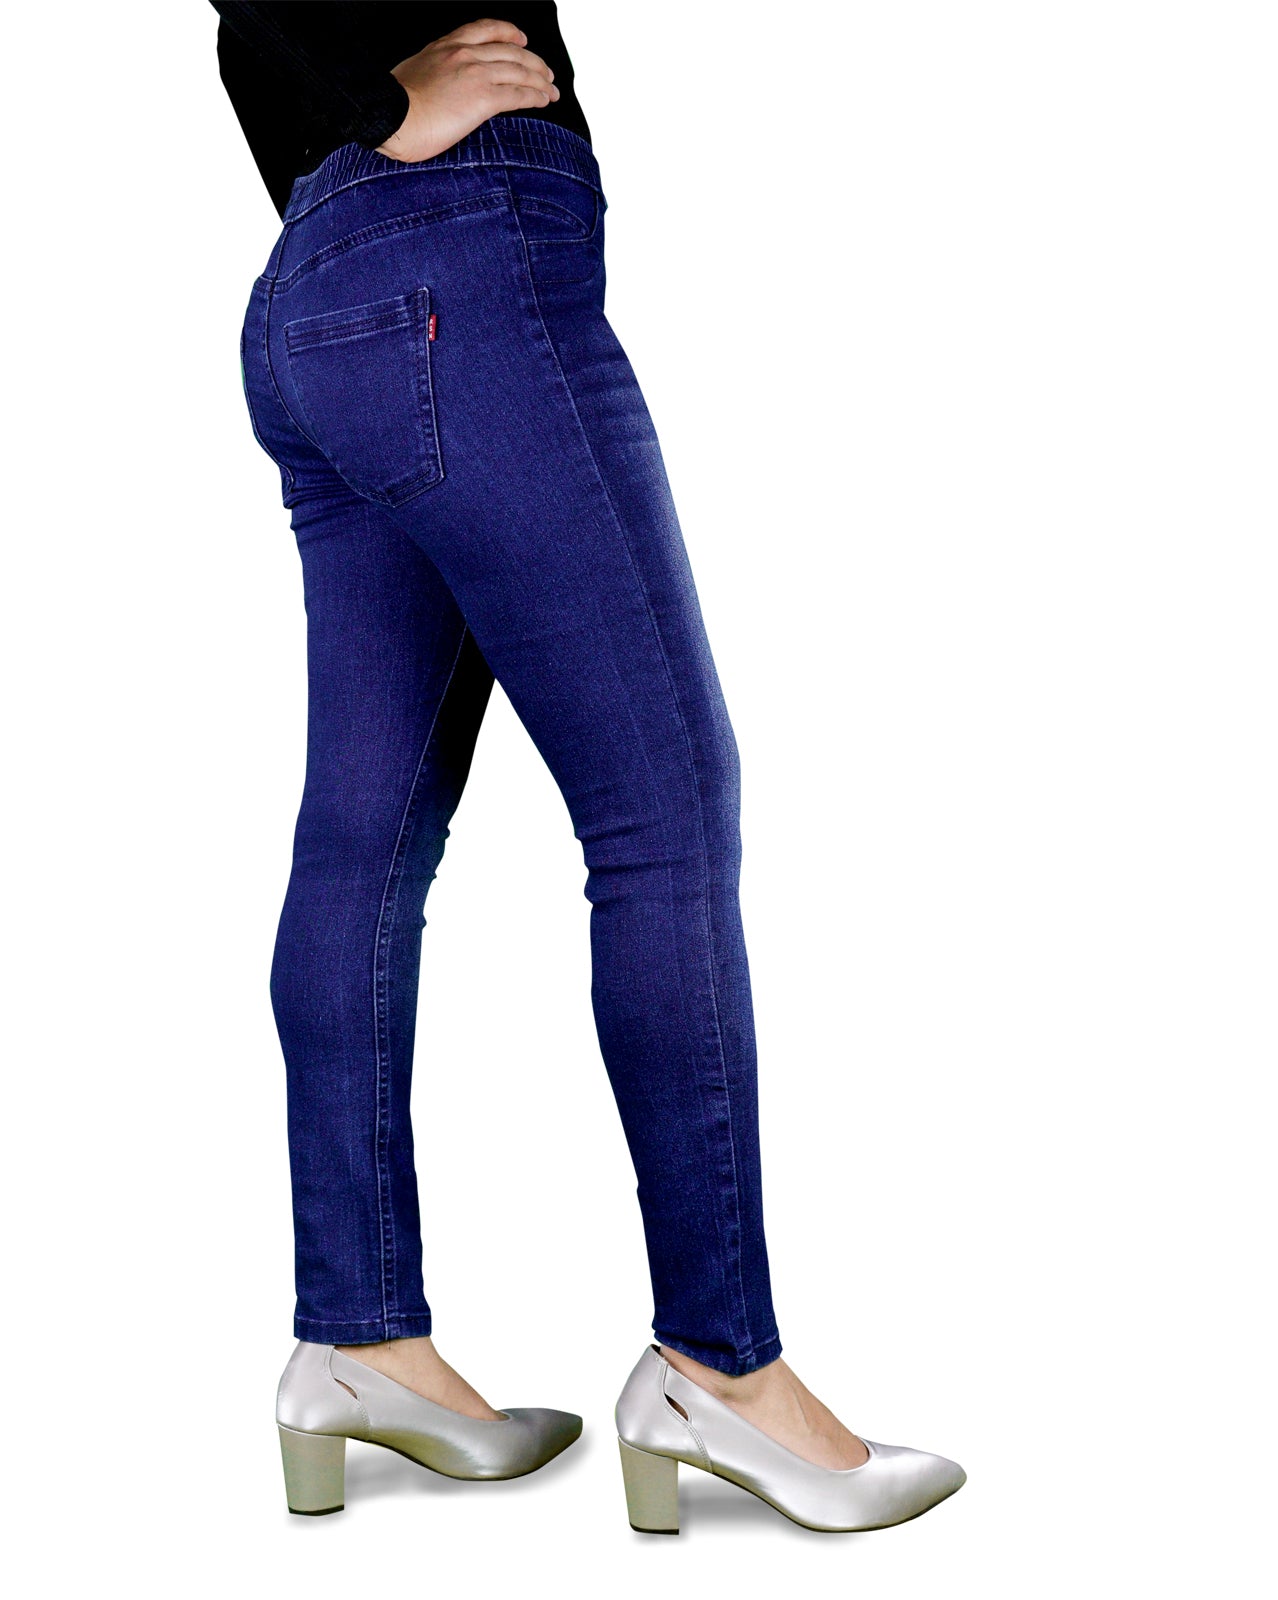 Just Cavalli Women's Distressed Dark Blue Jeggings Jeans